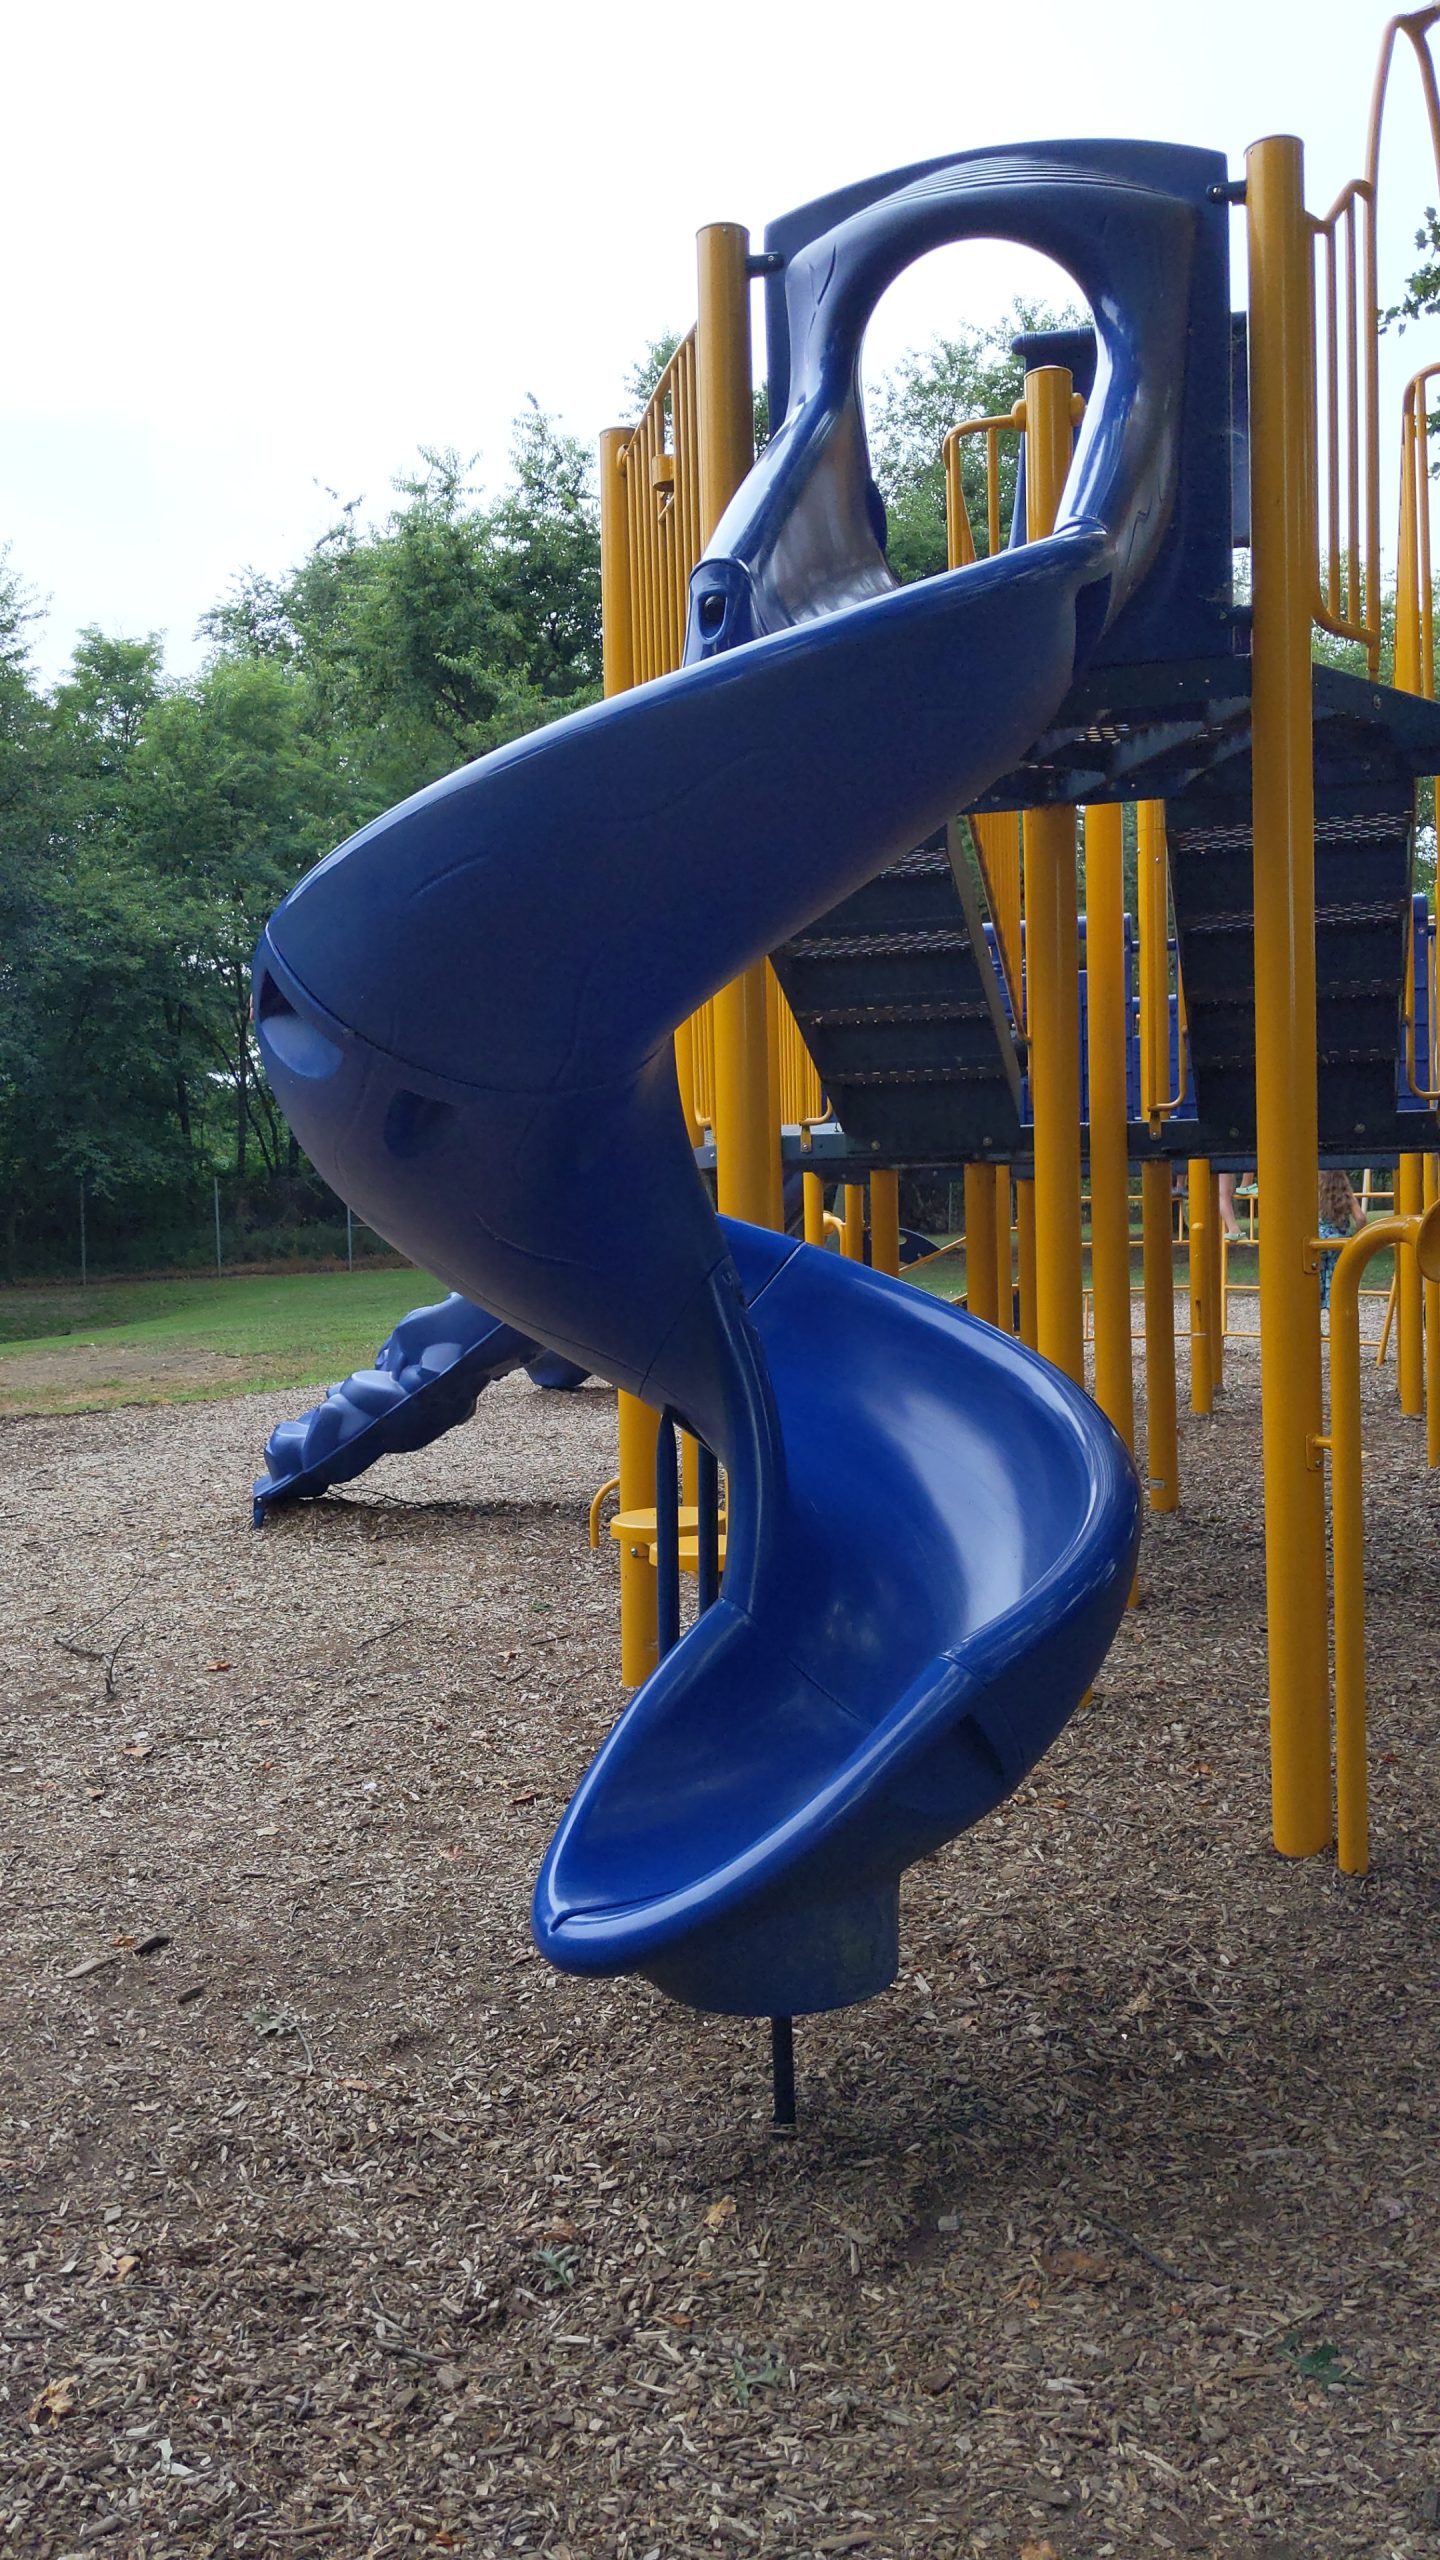 SLIDE - twisting slide TALL At Red Bank Battlefield Park Playground in National Park NJ